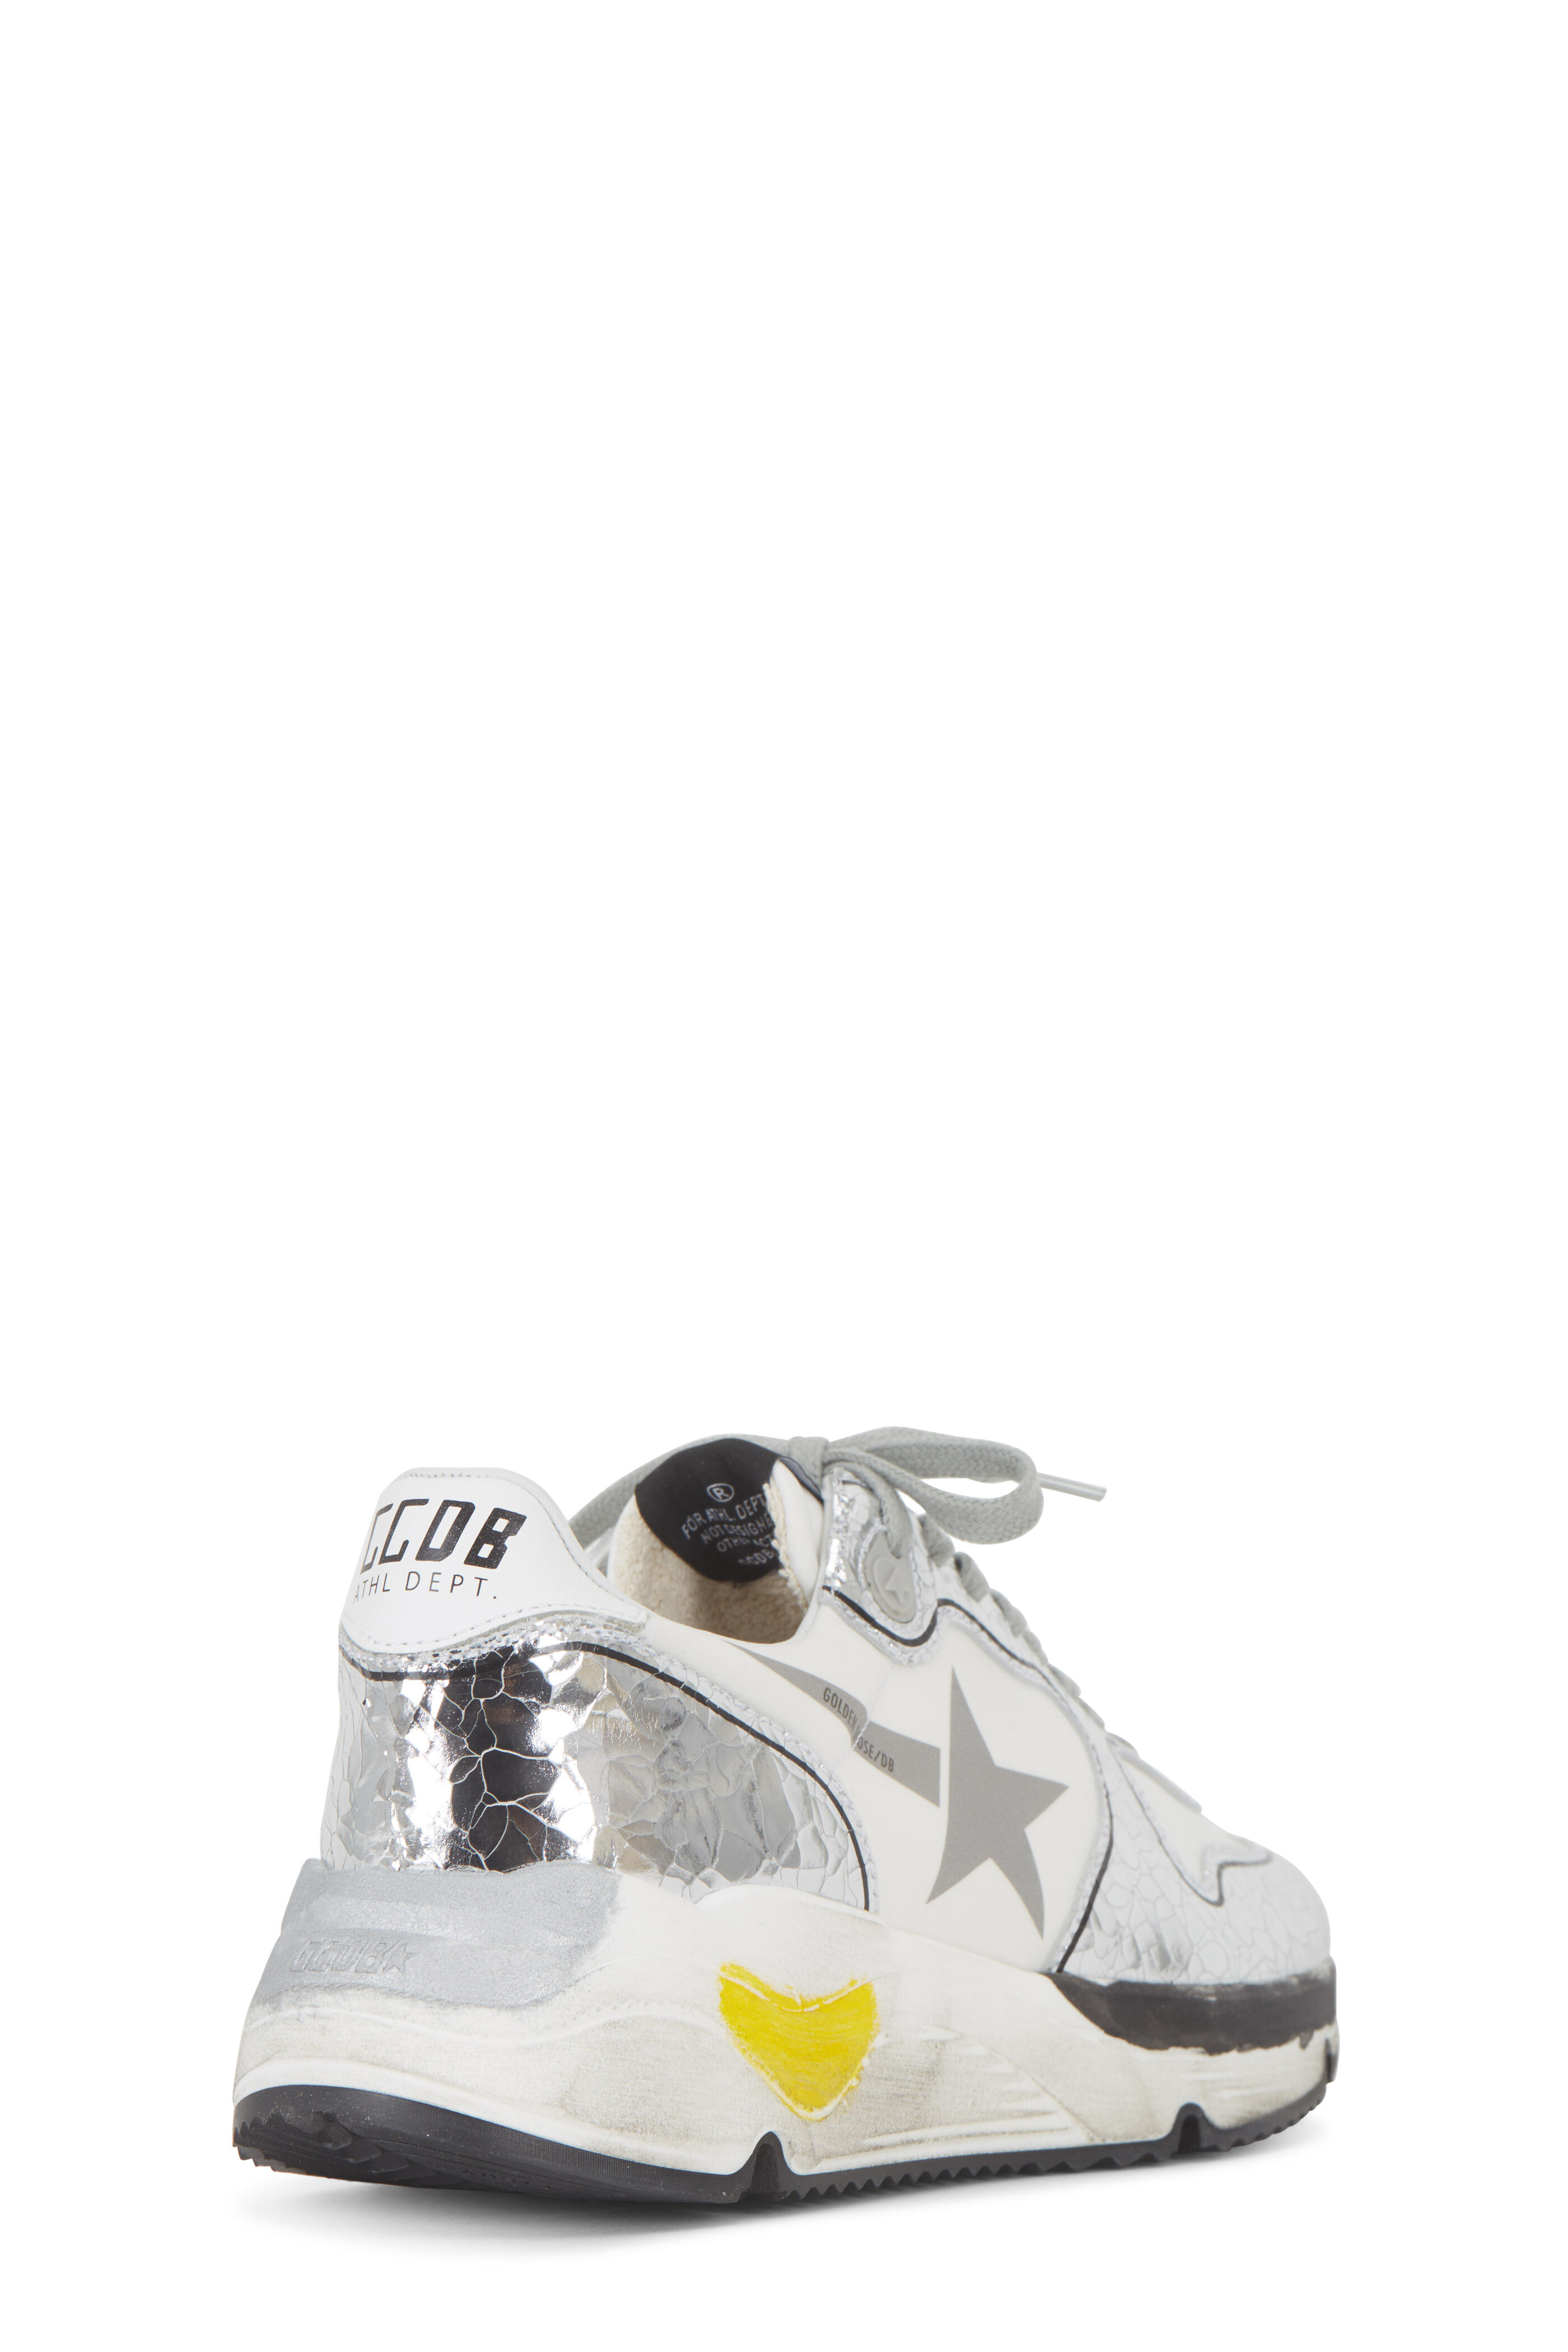 Golden Goose - White & Crackled Silver Leather Running Sneaker